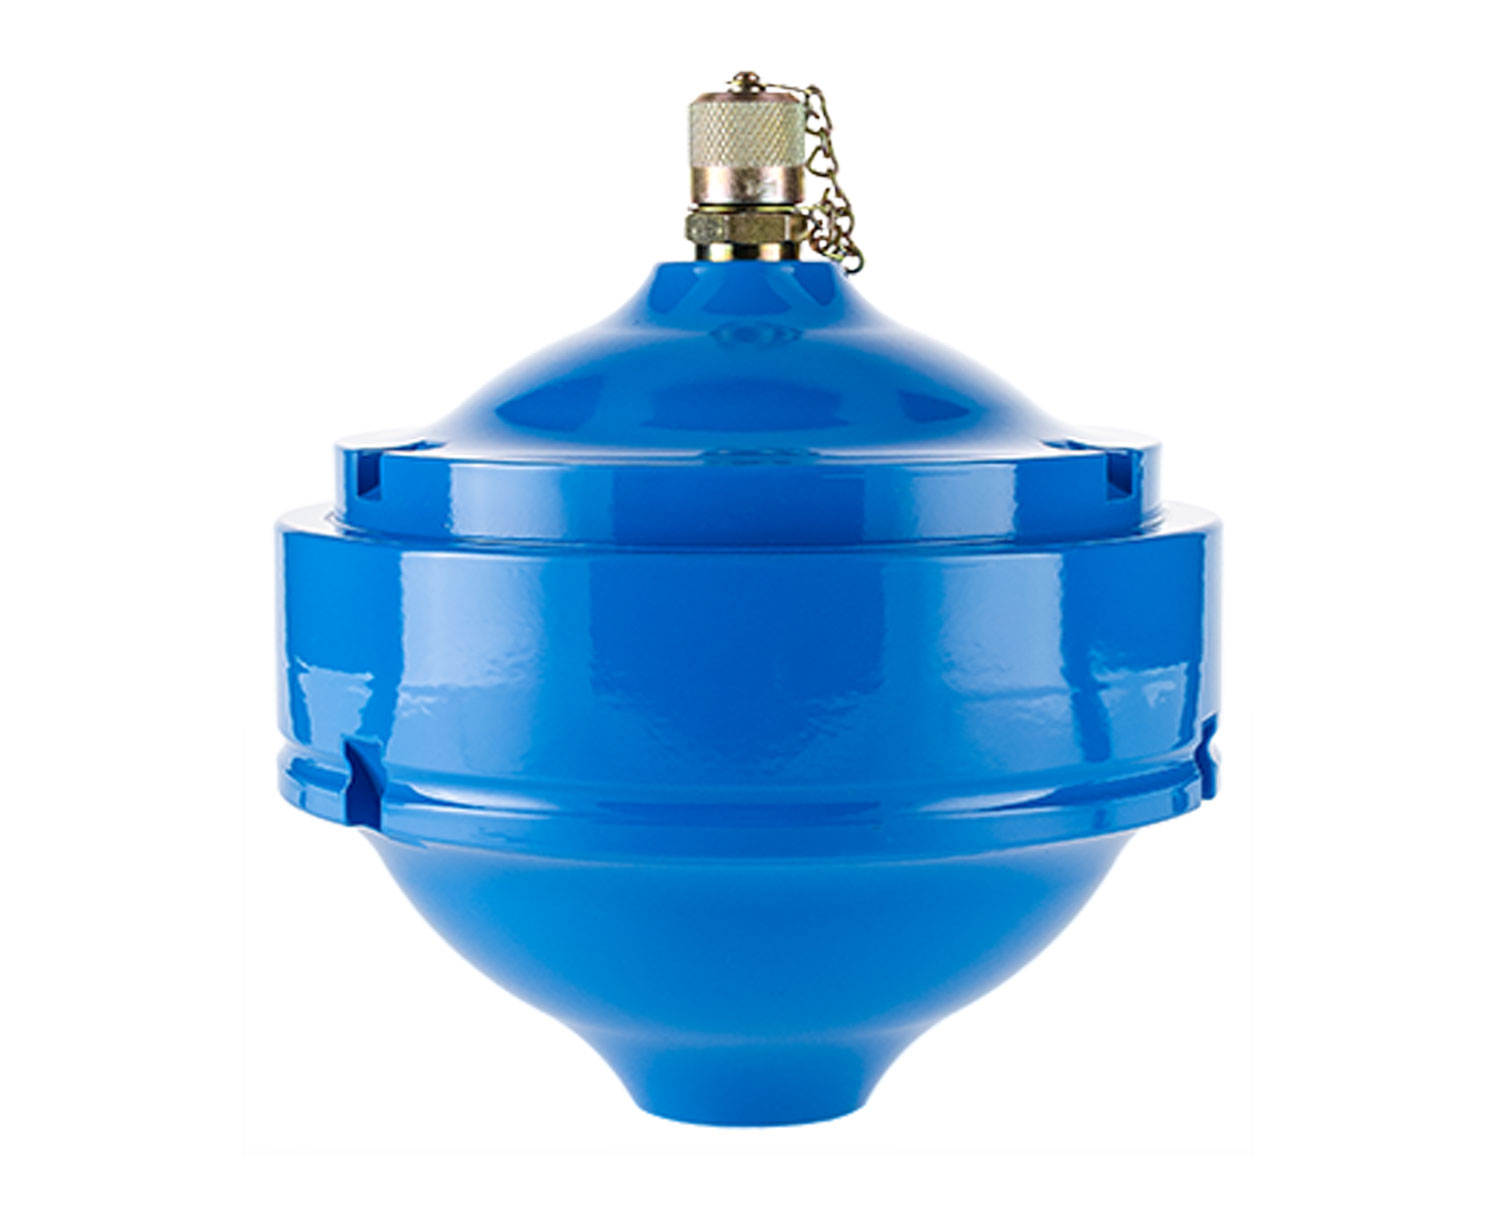 Geschraubte Membranspeicher AS von Hydro-Leduc, blau, kugelförmig